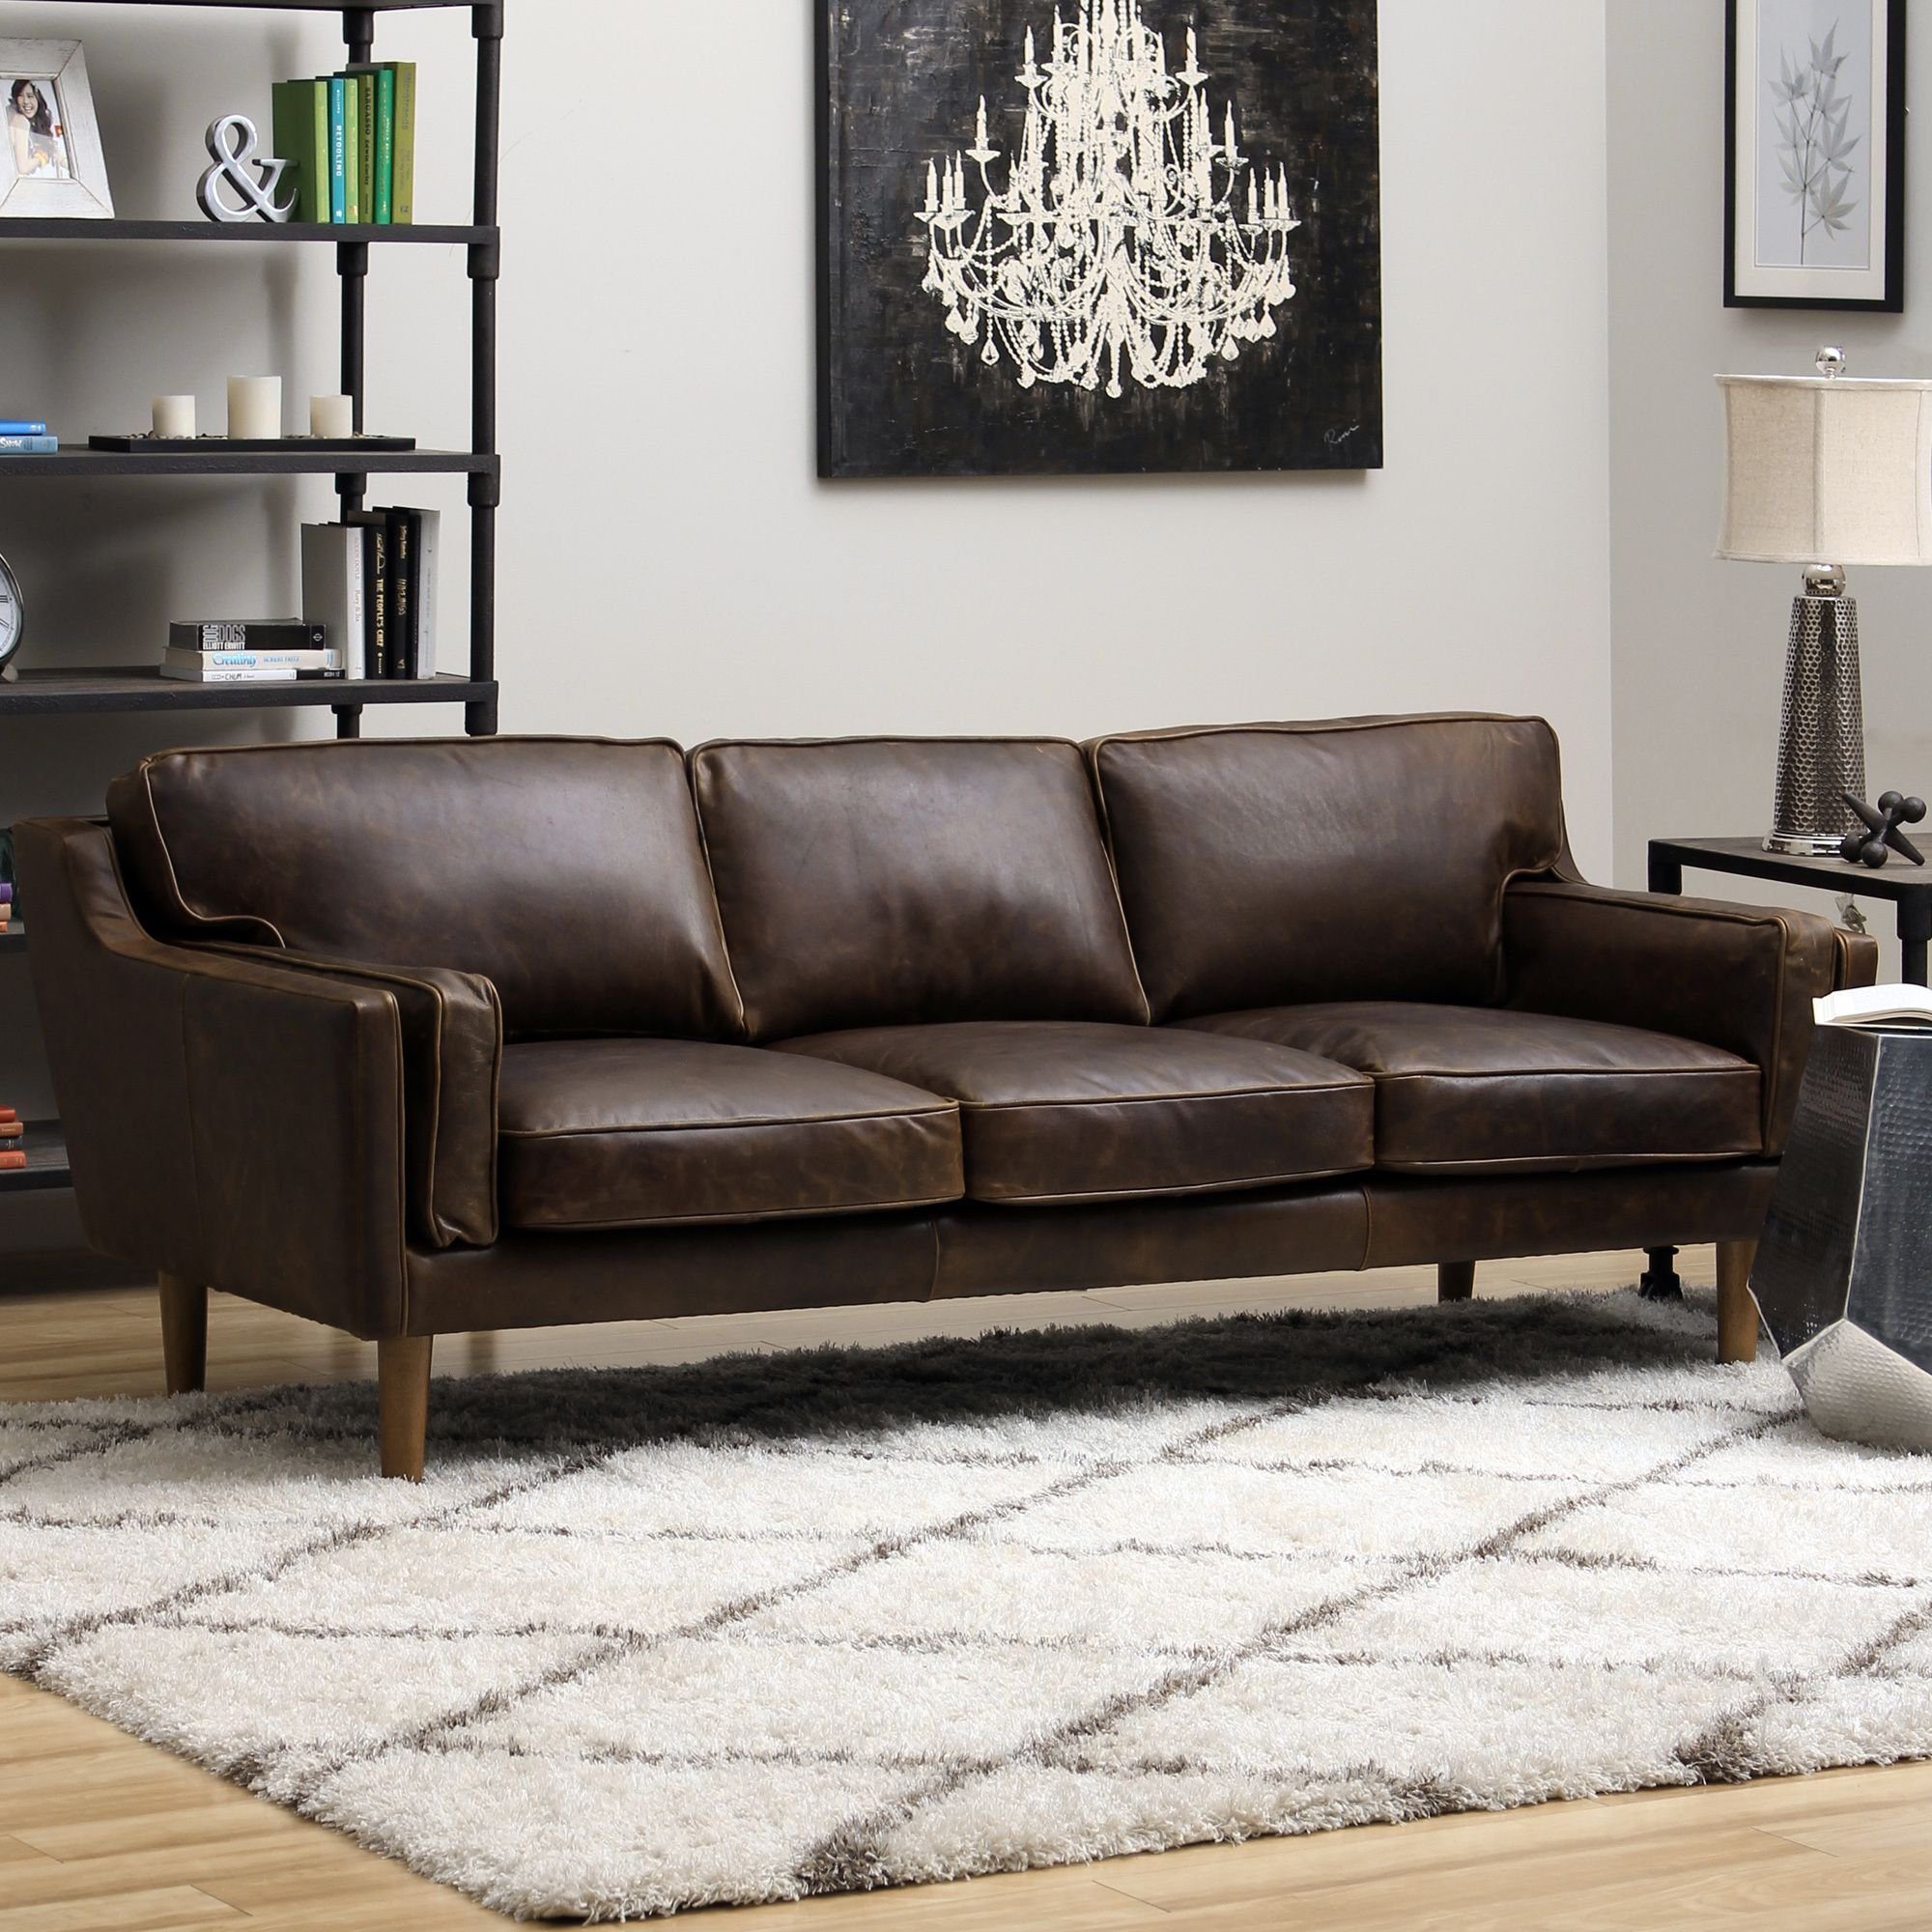 Диван шоколад. Диван Dirt Leather Sofa. Диван Leather softness Sofa. Коричневый кожаный диван. Диван шоколадного цвета.